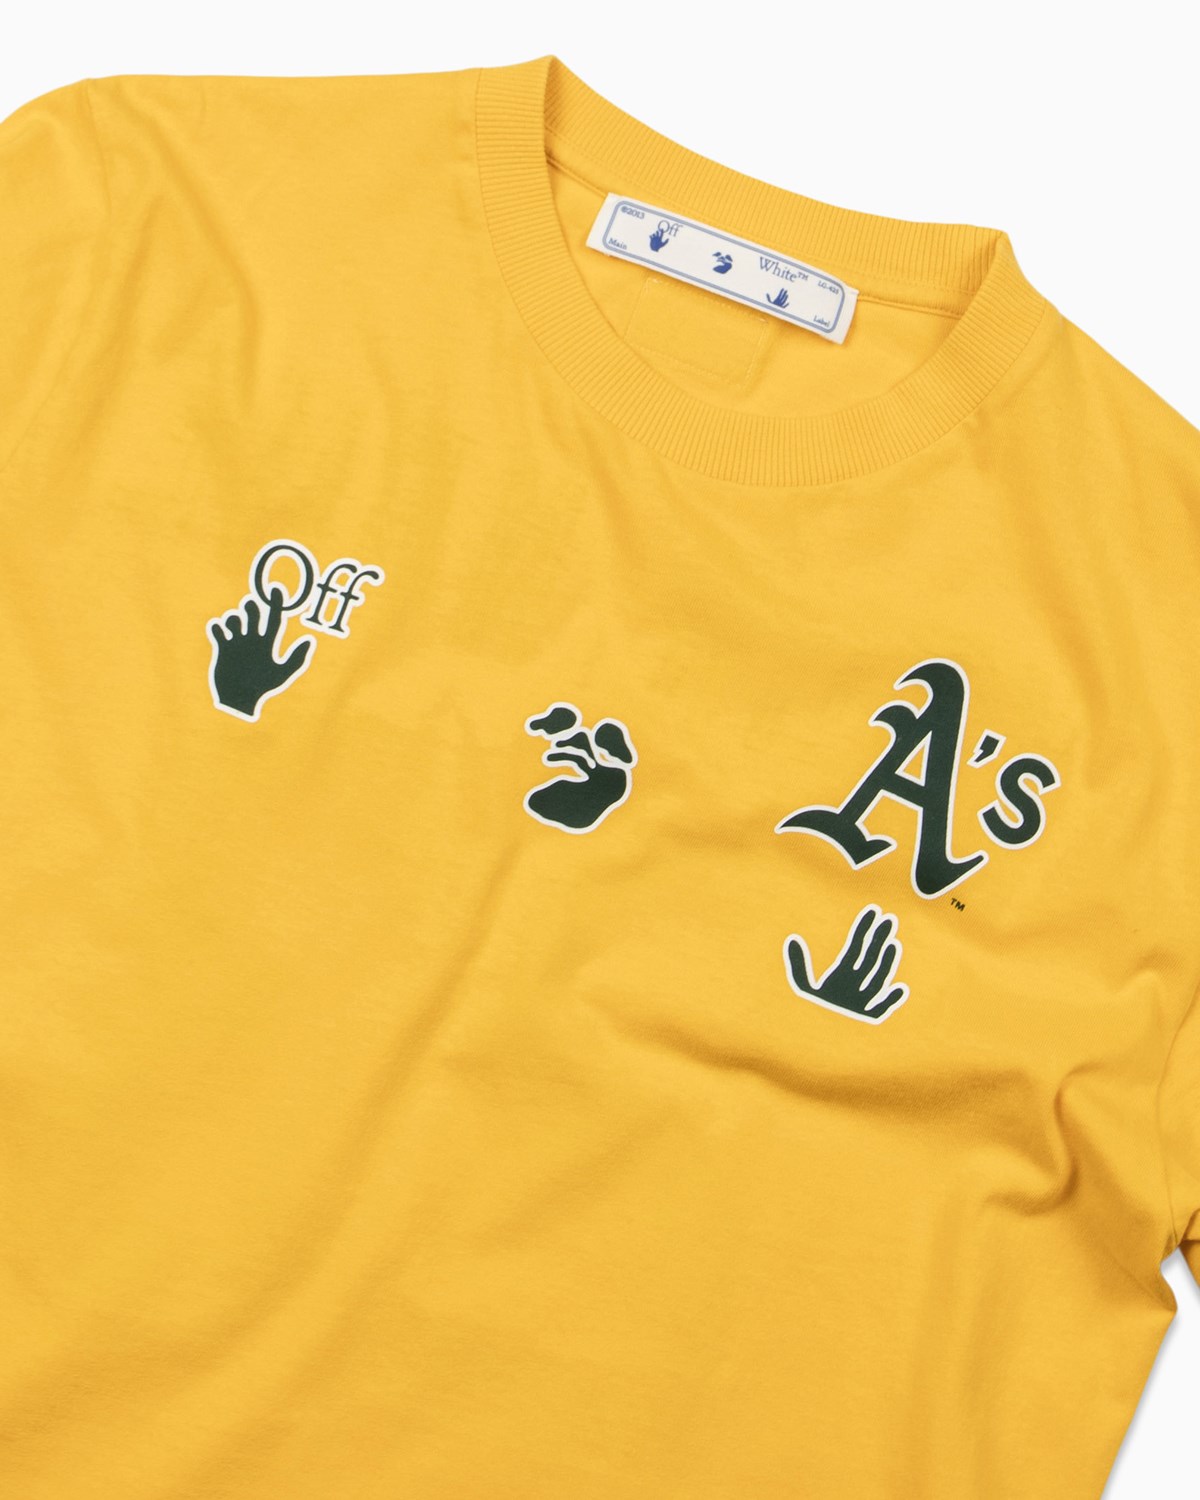 Oakland Athletics A's T-Shirt Mens Large Gray Yellow MLB